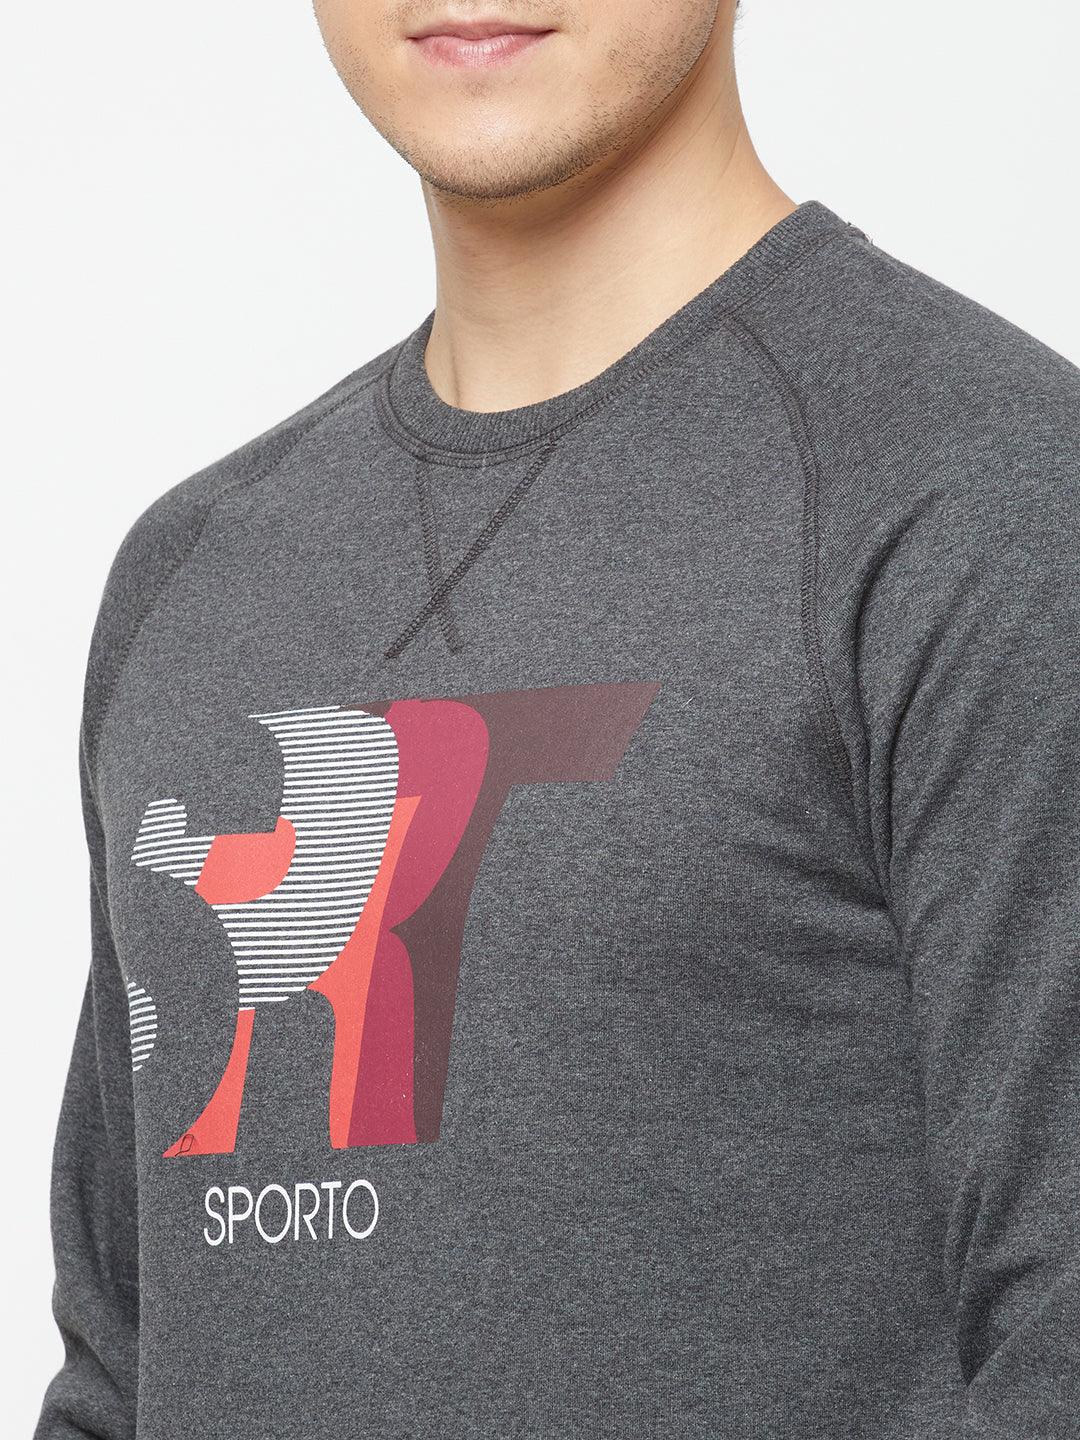 Sporto Crew Neck Printed Sweatshirt - Anthra Melange